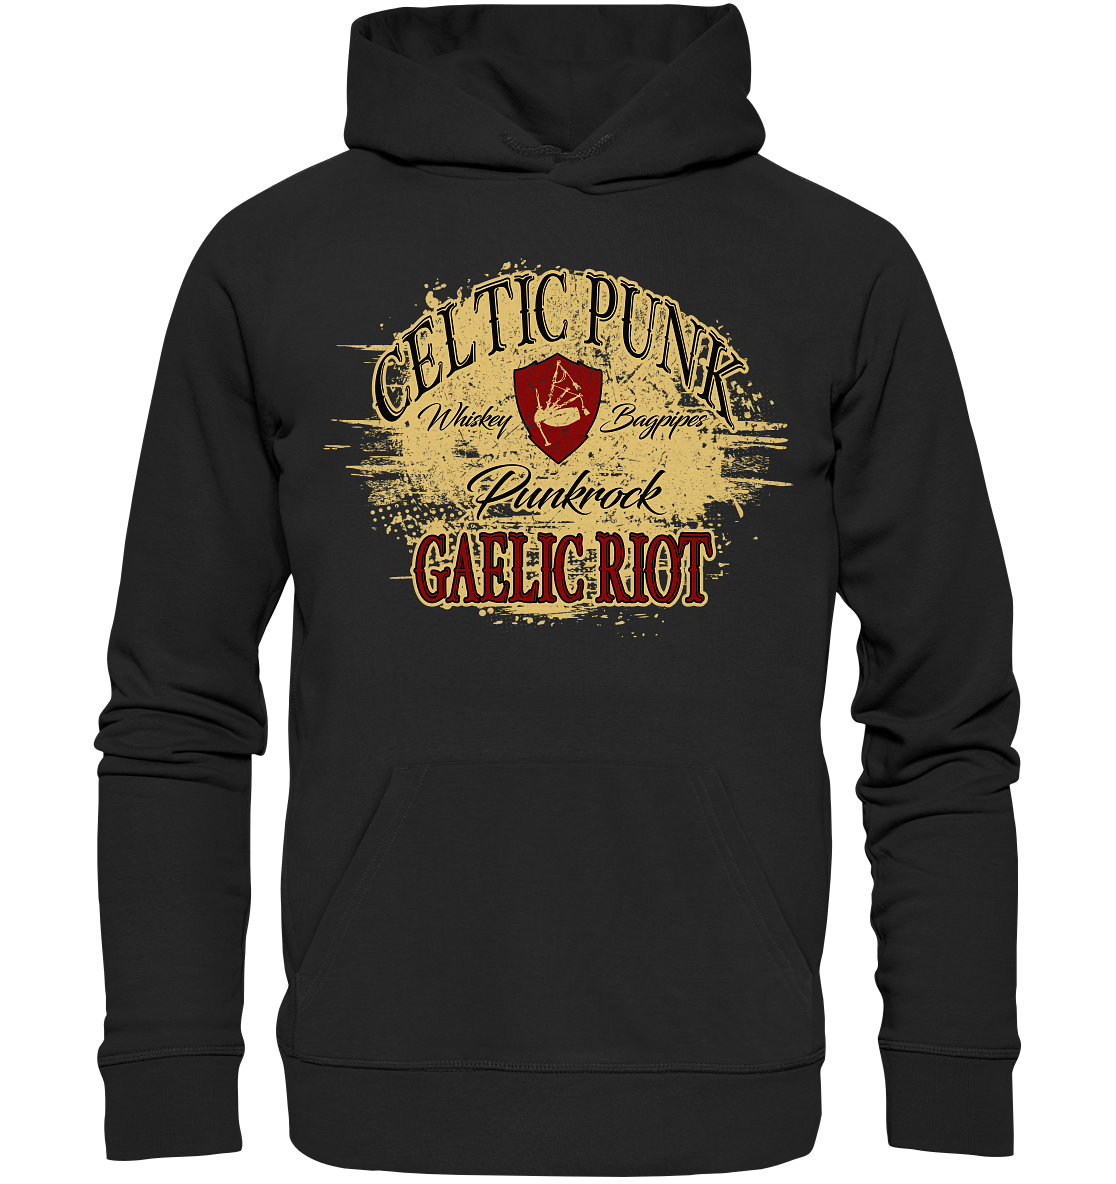 Celtic Punk "Gaelic Riot" - Organic Hoodie